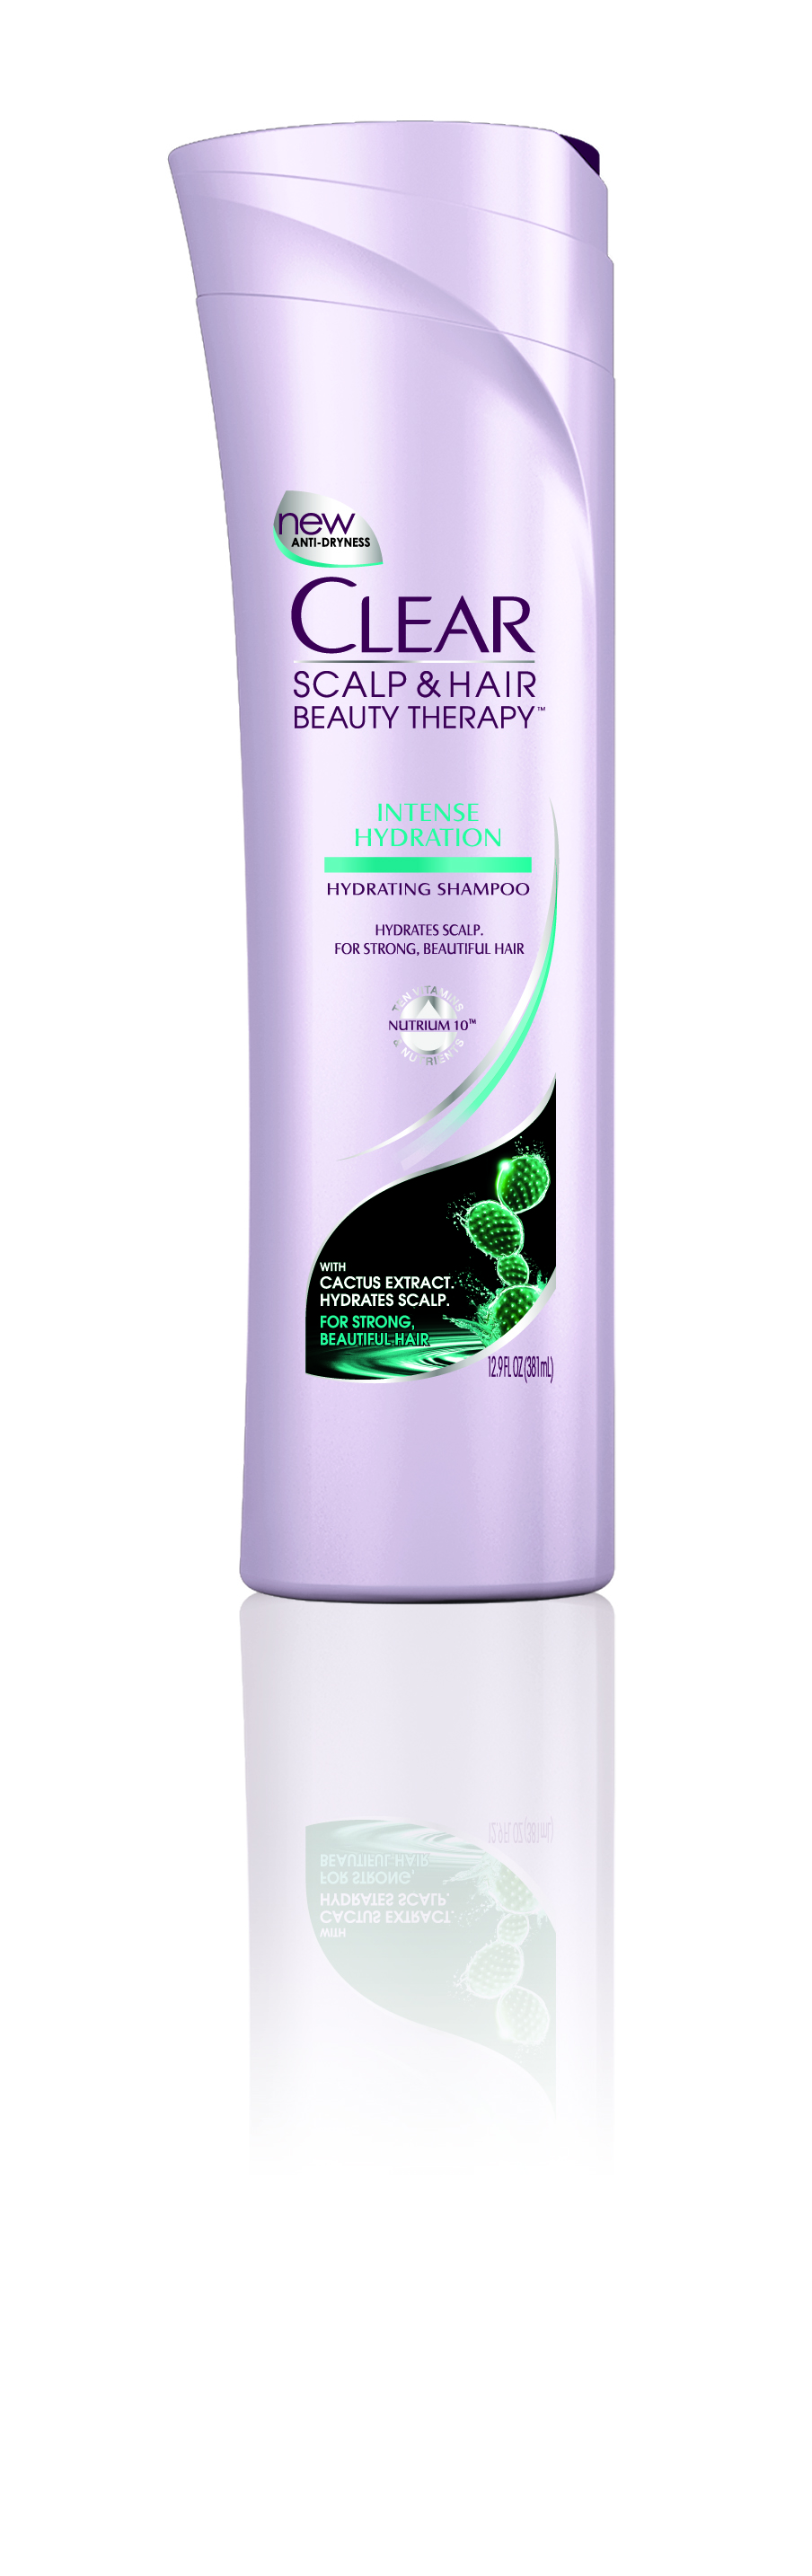 CLEAR Scalp & Hair Intense Hydration Hydrating Shampoo